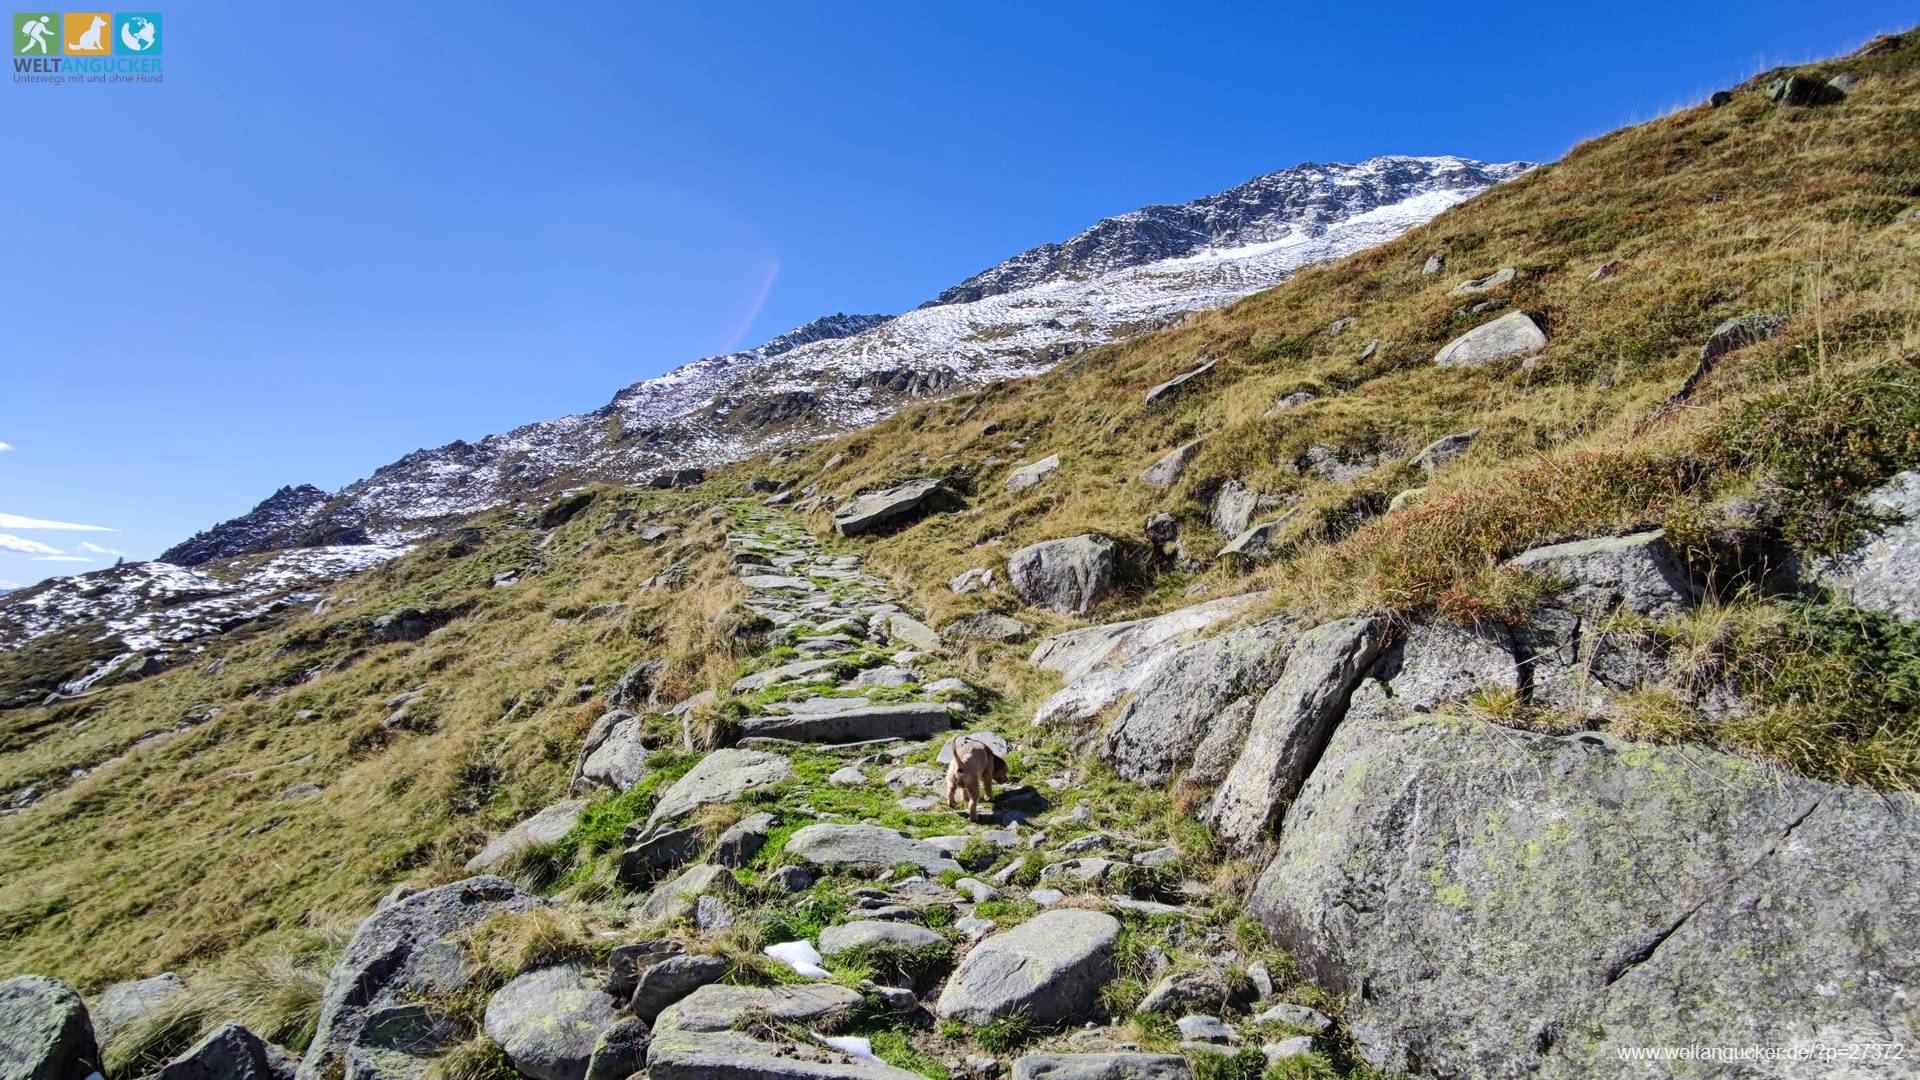 2/10 - Krimmler Tauernweg zum Krimmler Tauern Pass im Südtiroler Naturpark Rieserferner-Ahrn